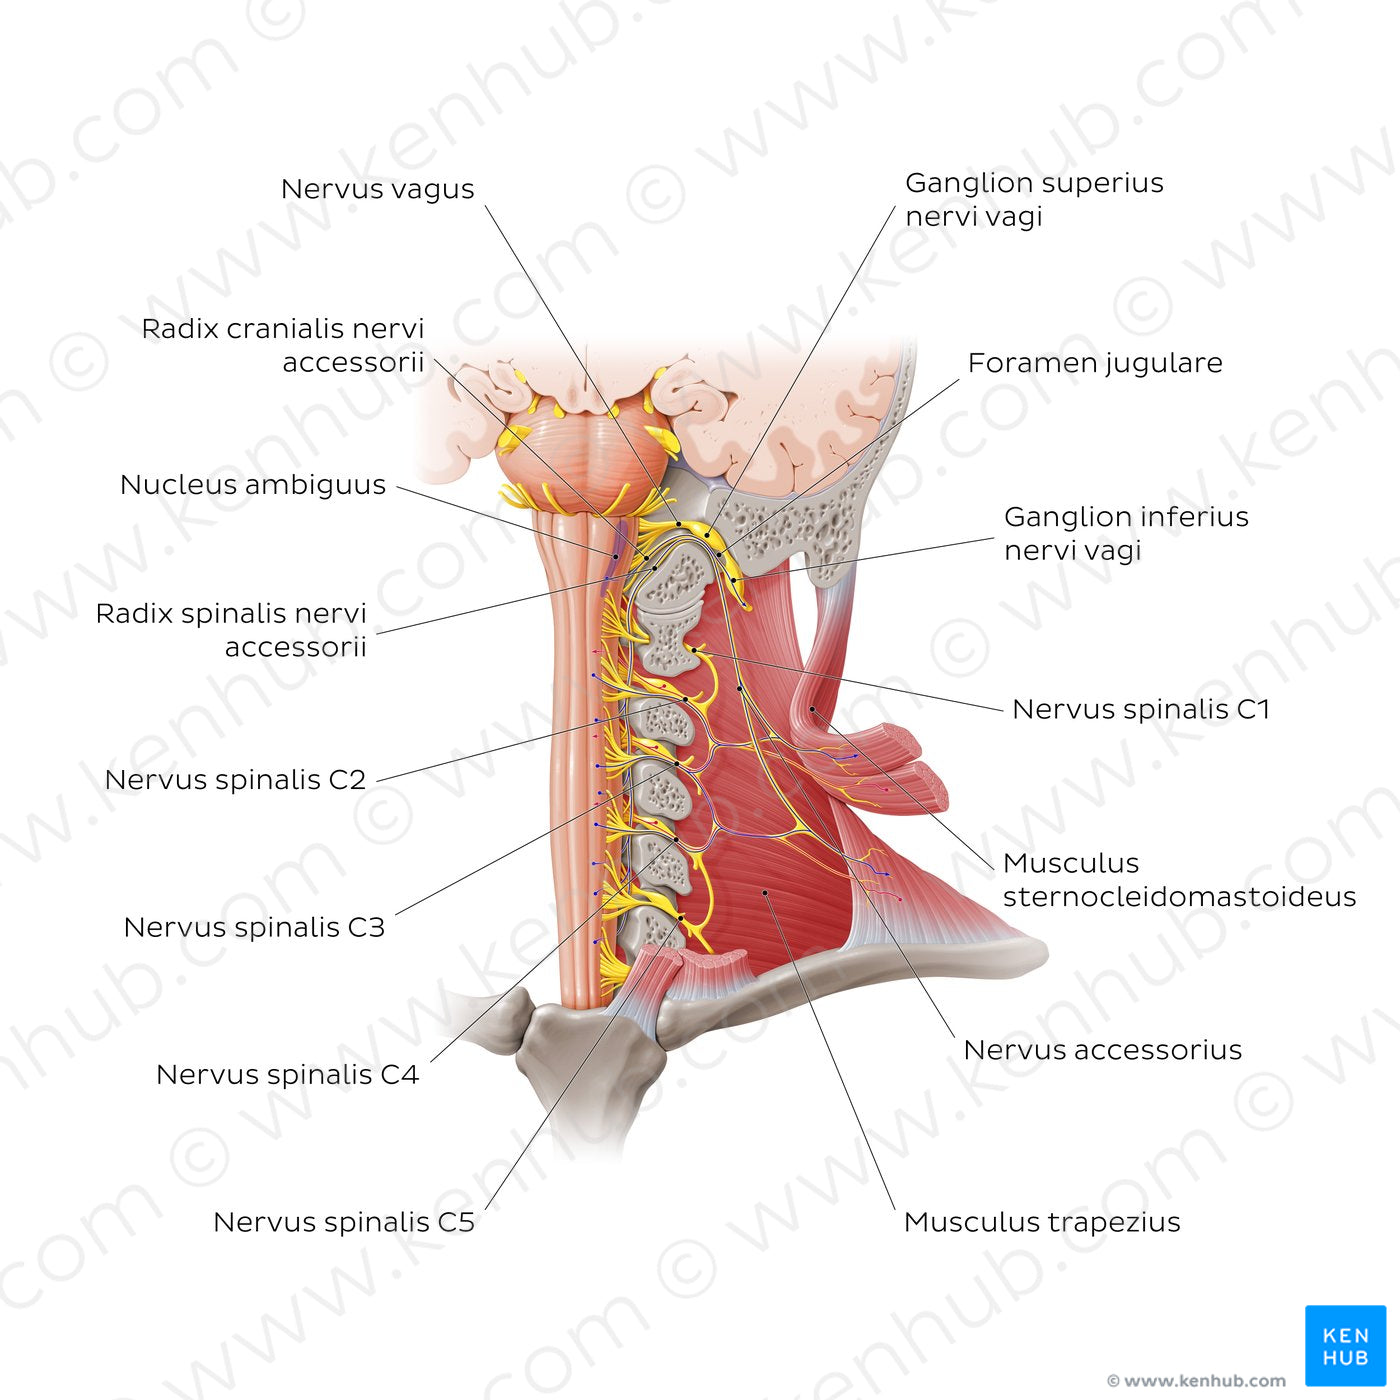 Accessory nerve (Latin)